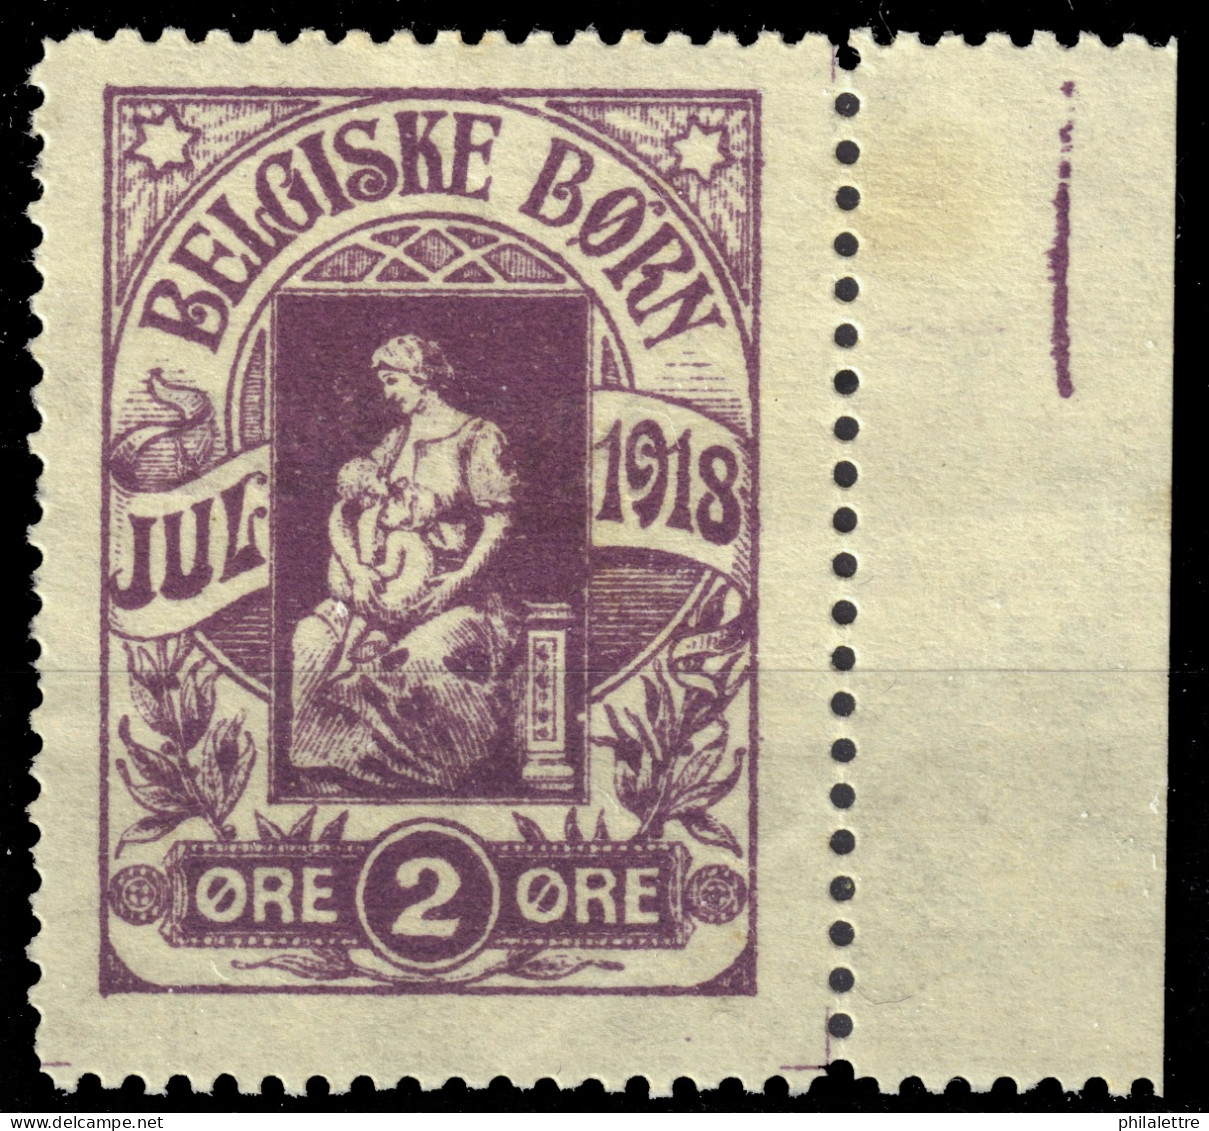 DANEMARK / DENMARK - Christmas 1918 - 2øre Purple "BELGISKE BØRN" (Belgian Children) Charity Stamp (marked NORGE On Gum) - Navidad